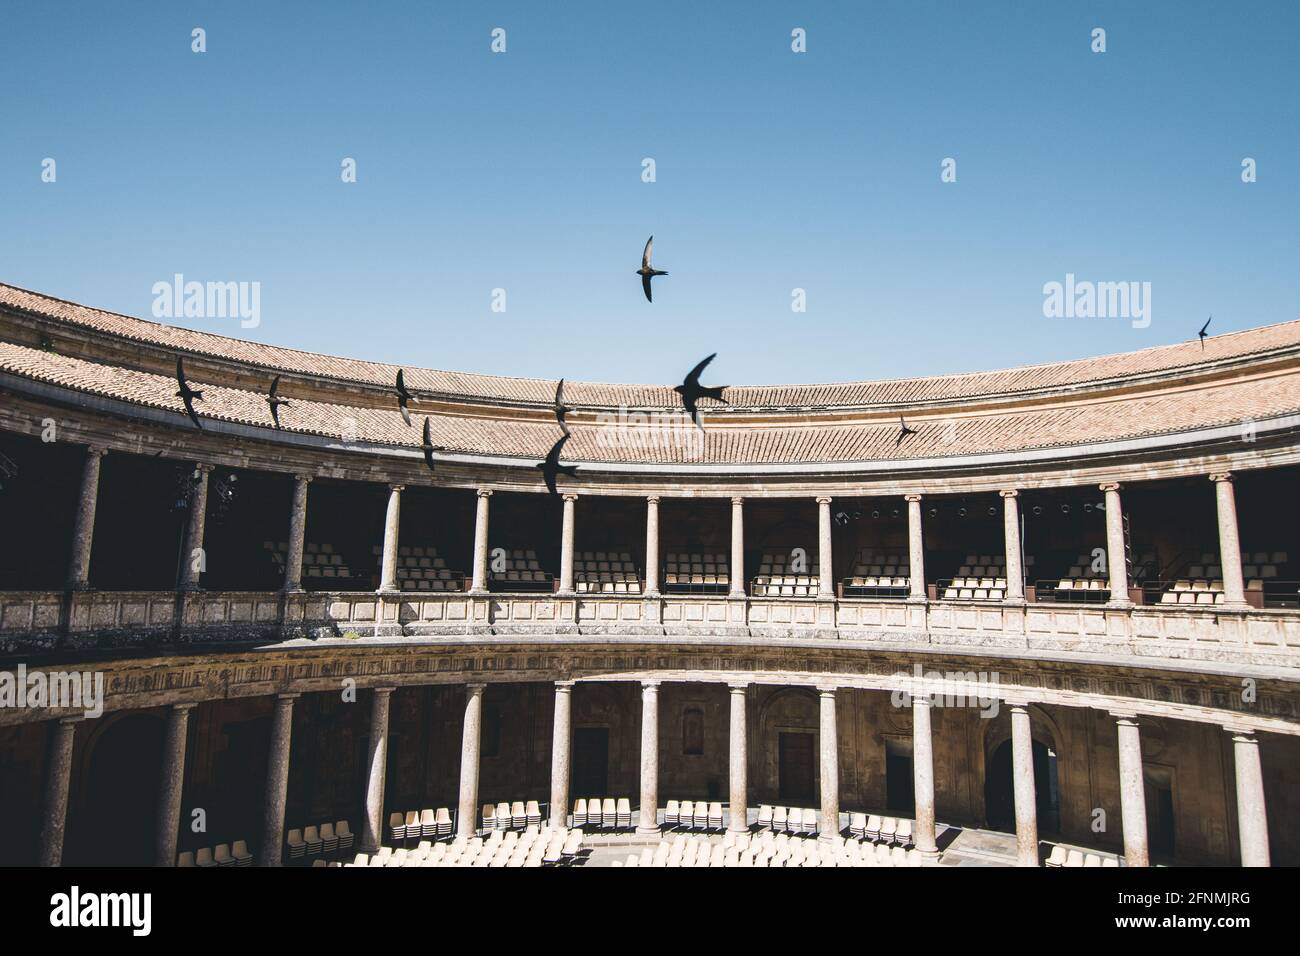 Beautiful shot taken inside the Palacio de Carlos V (Alhambra) fortress in Granada, Spain Stock Photo